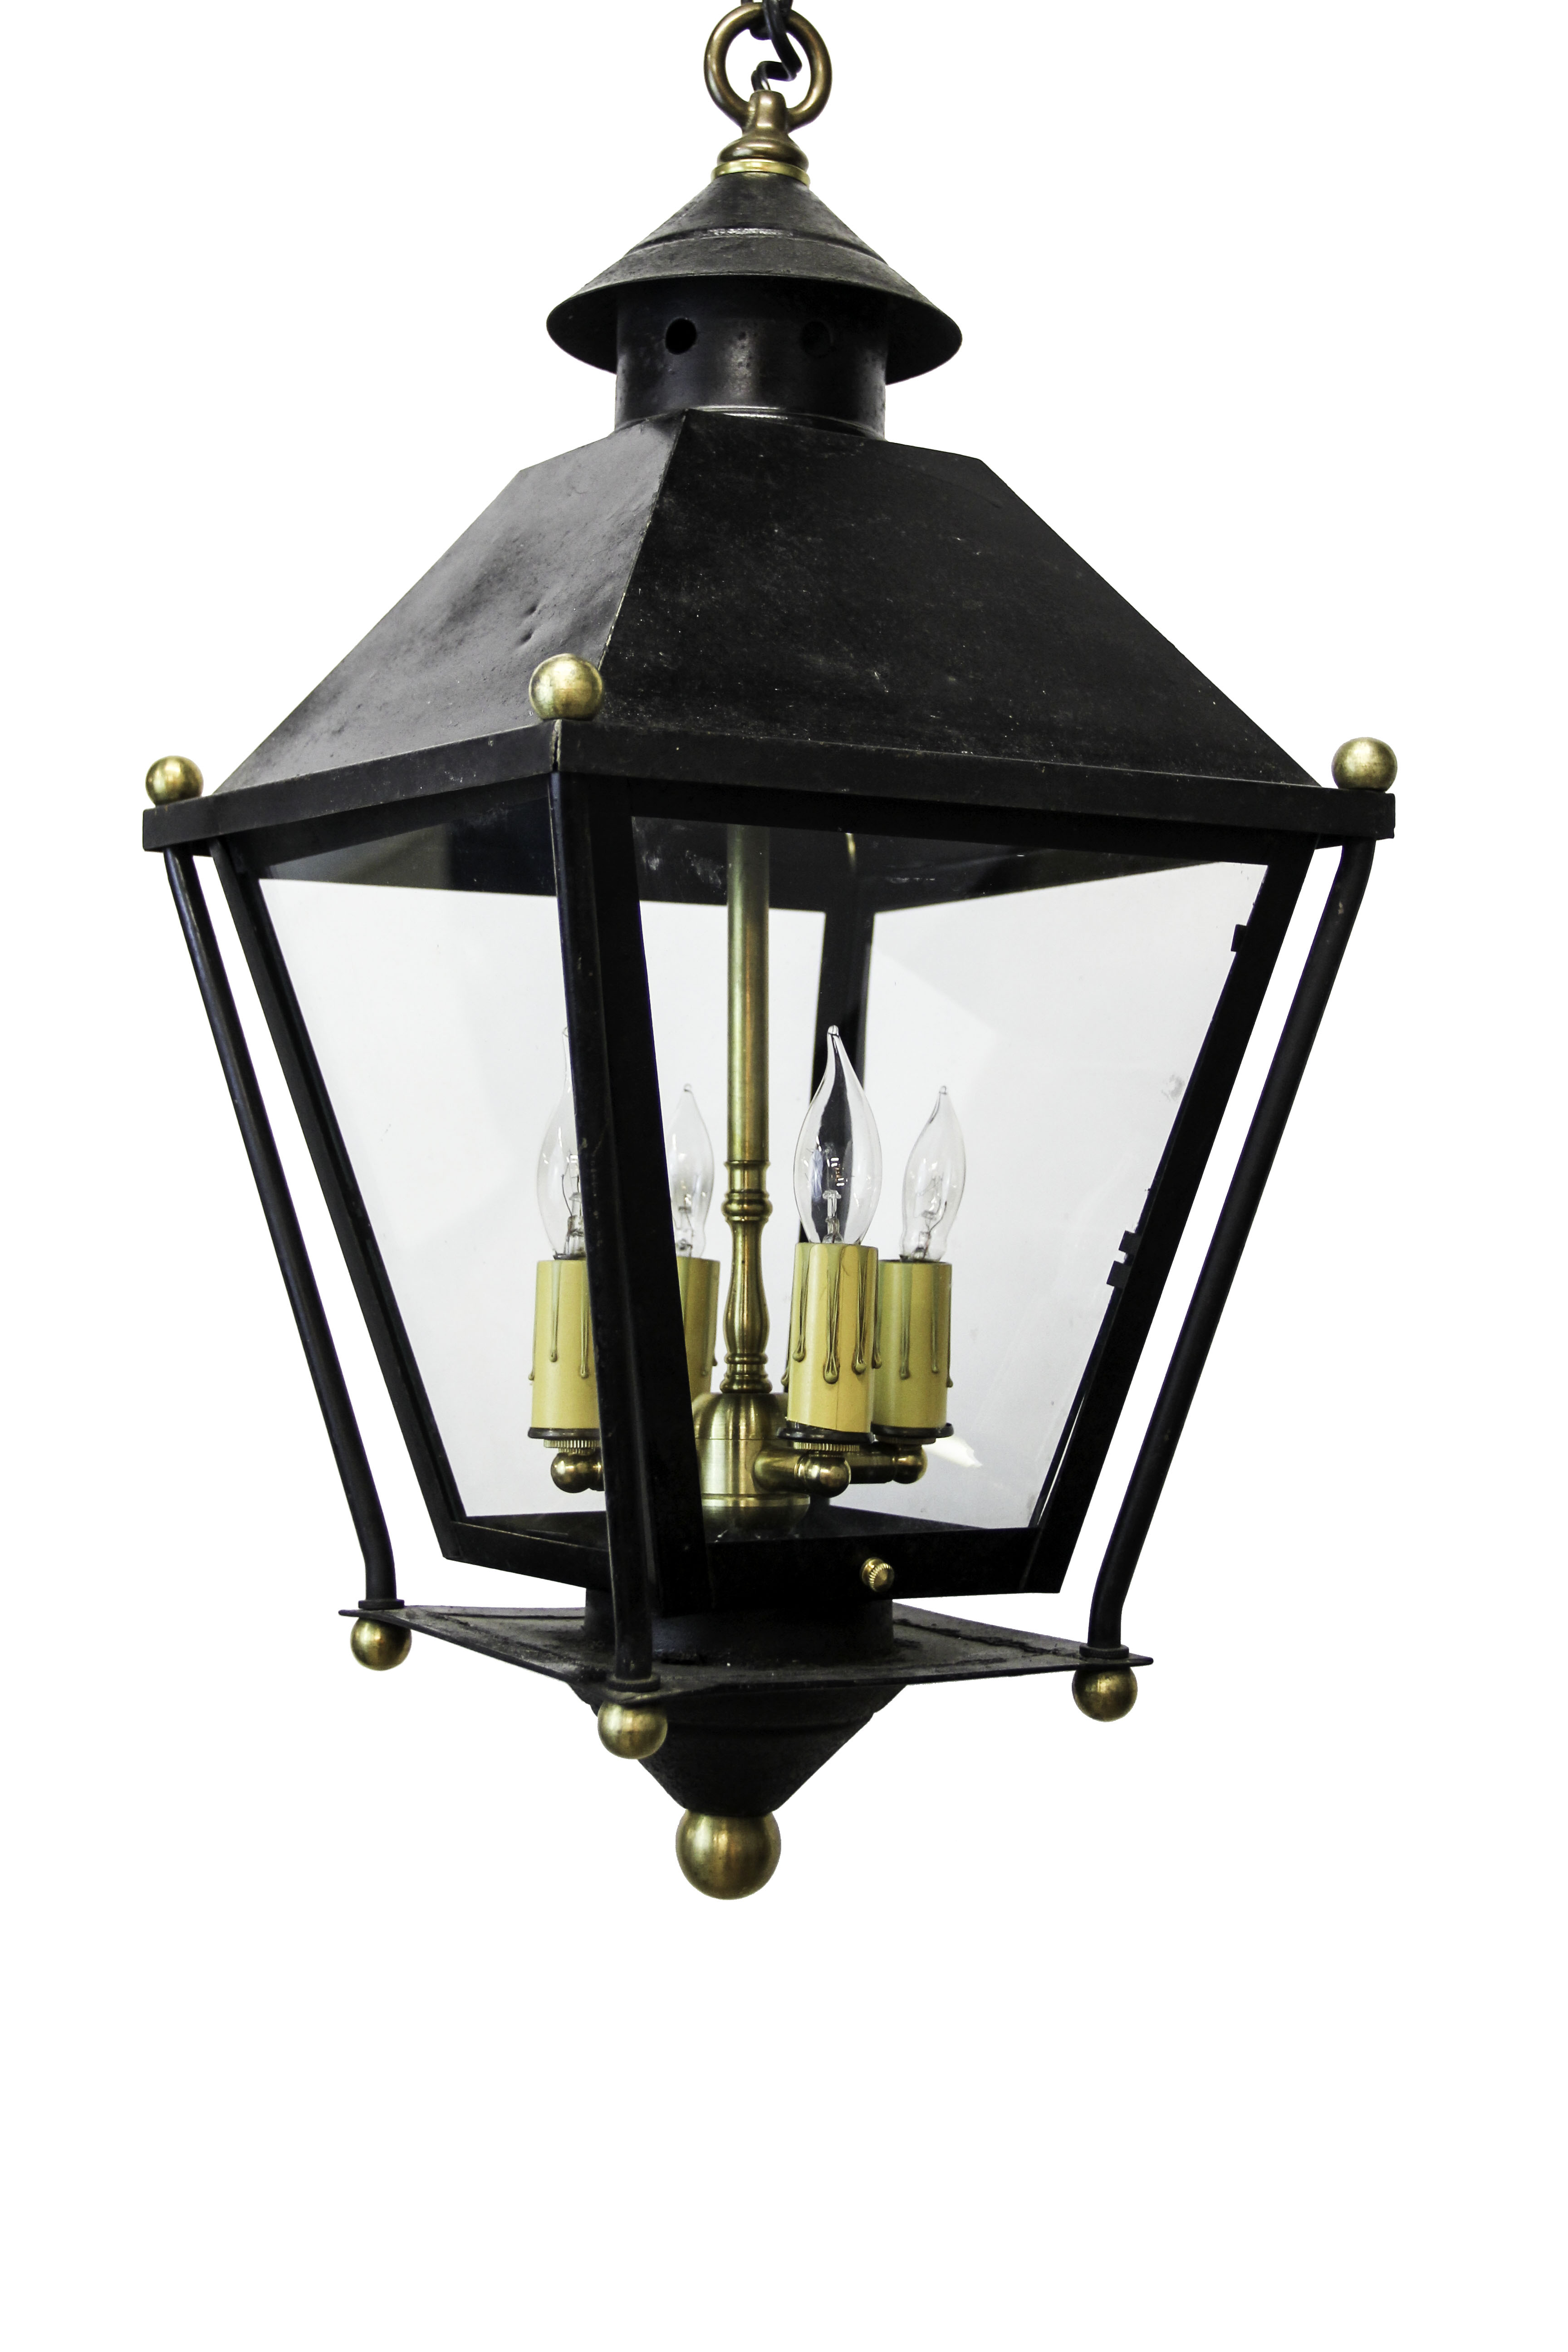 Beautiful Old Lantern | The Lamp Shoppe